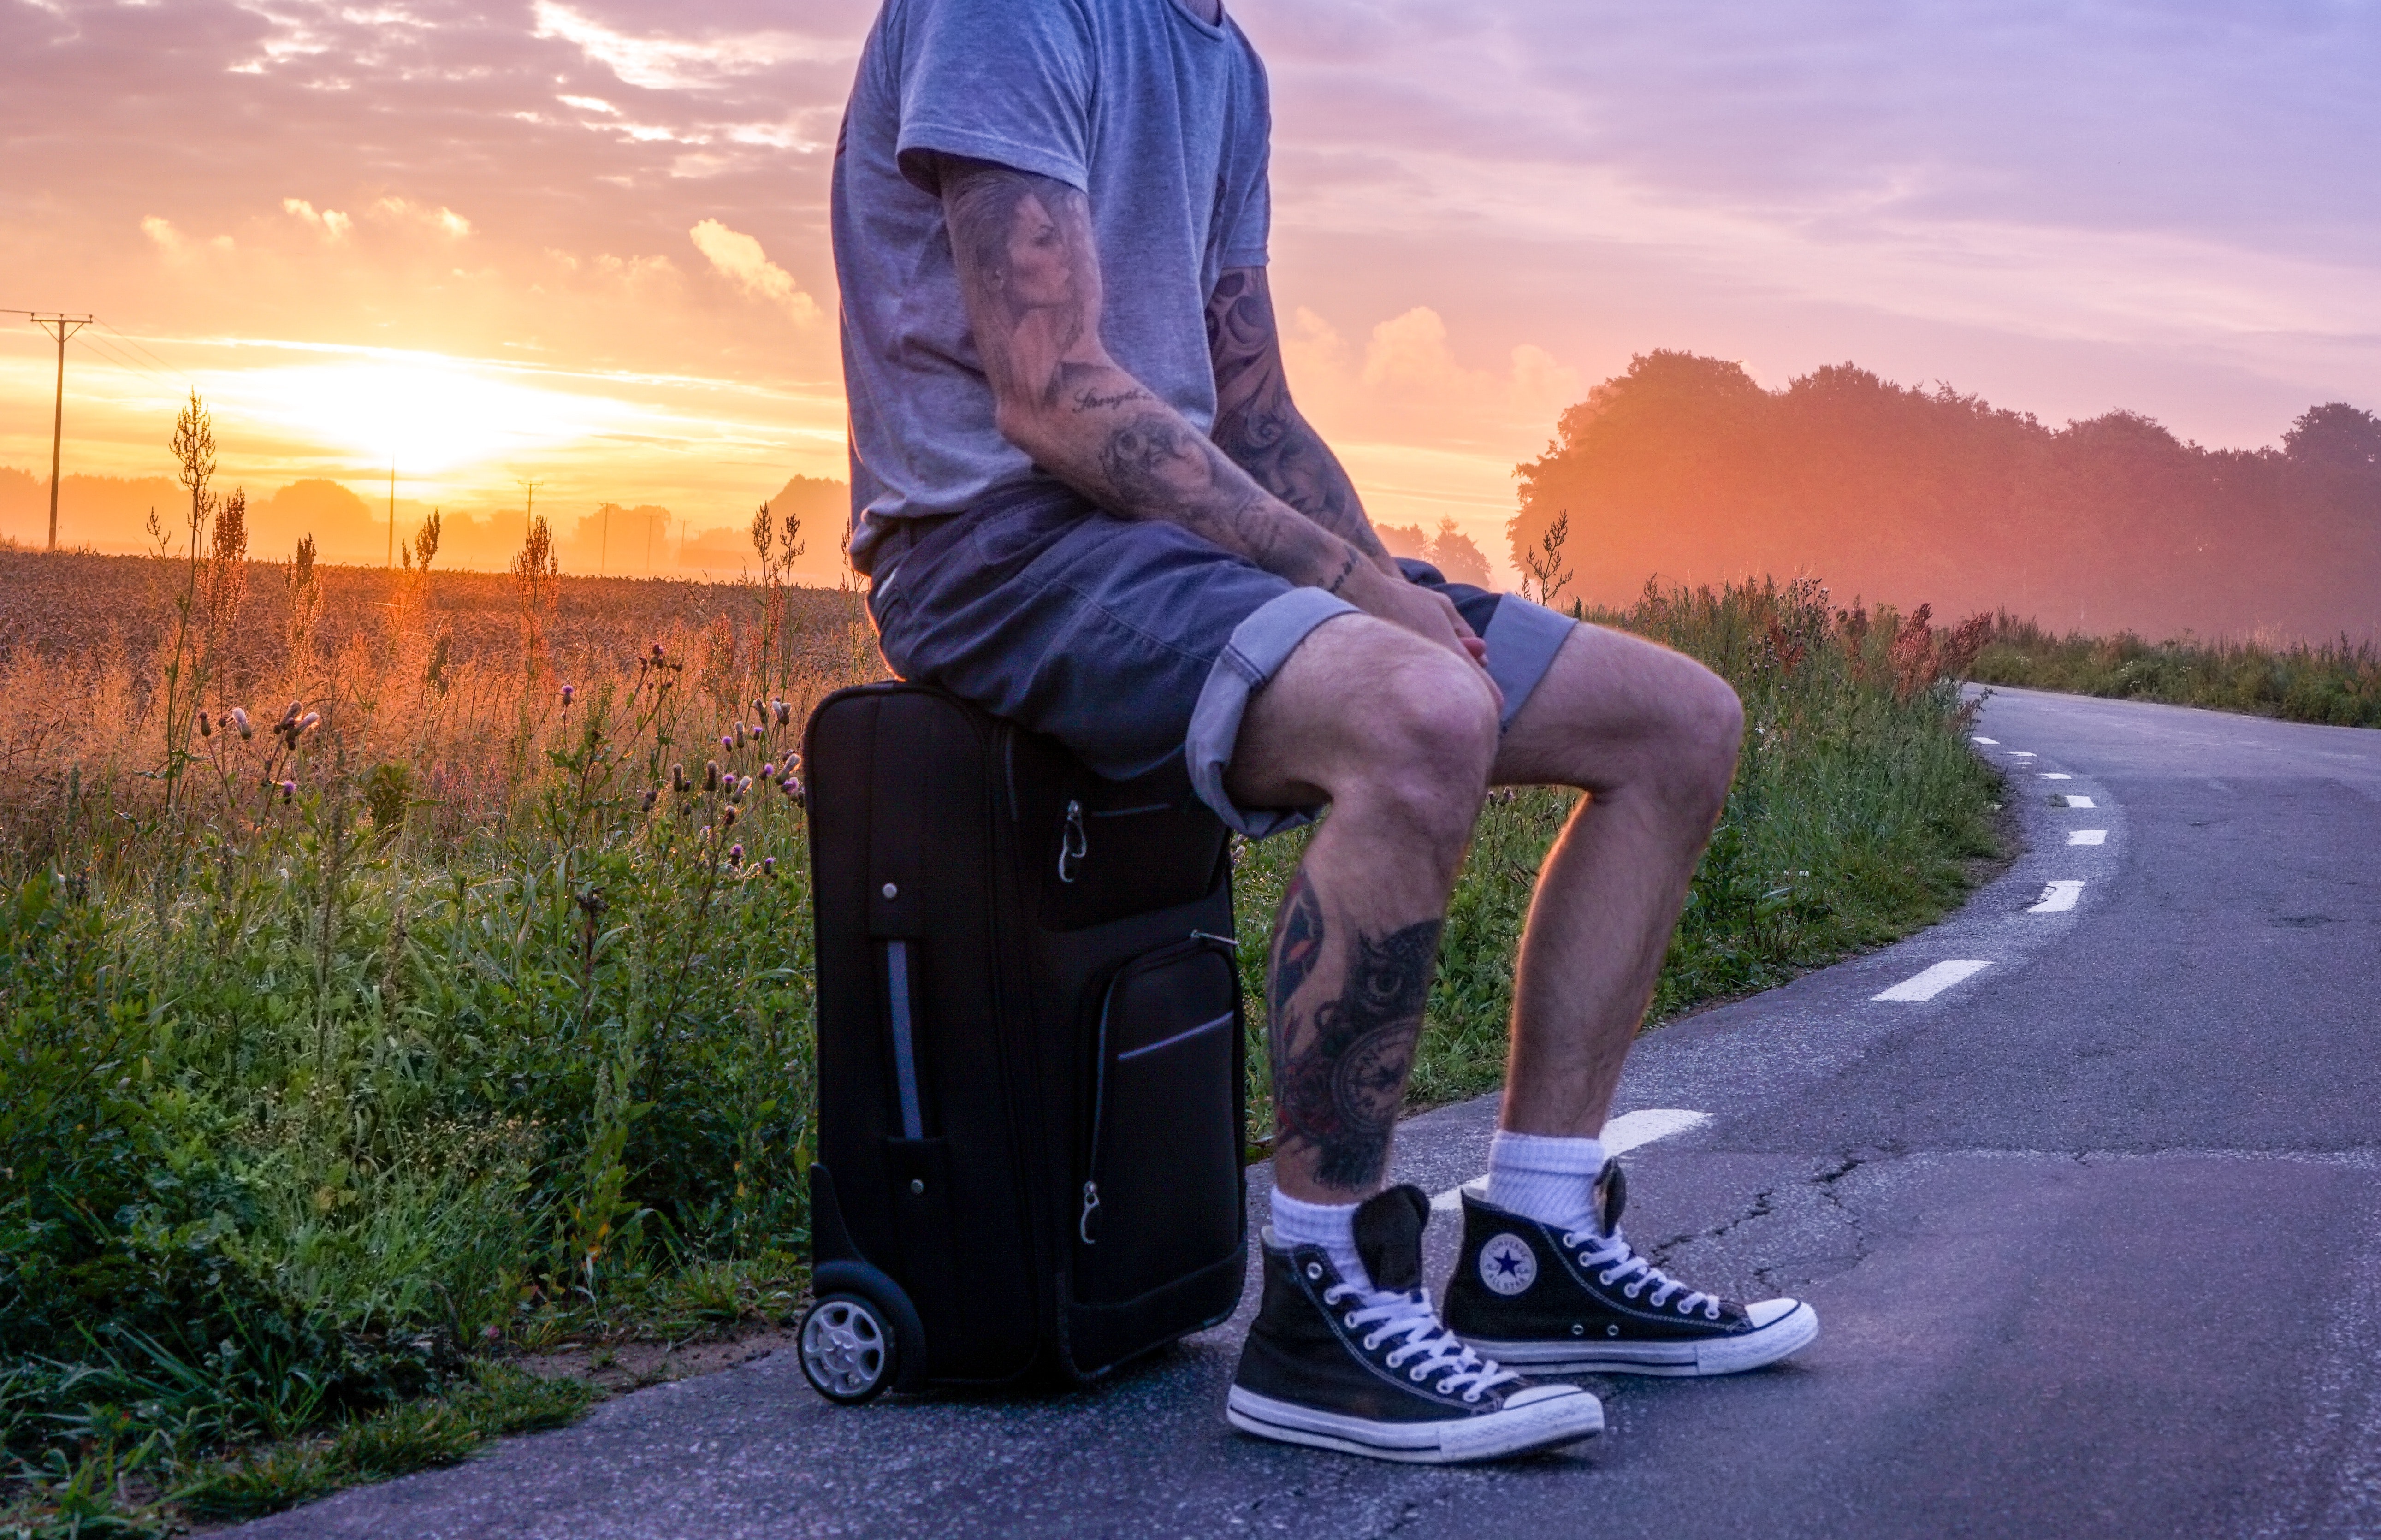 Man sitting on luggage on road side during sunset photo